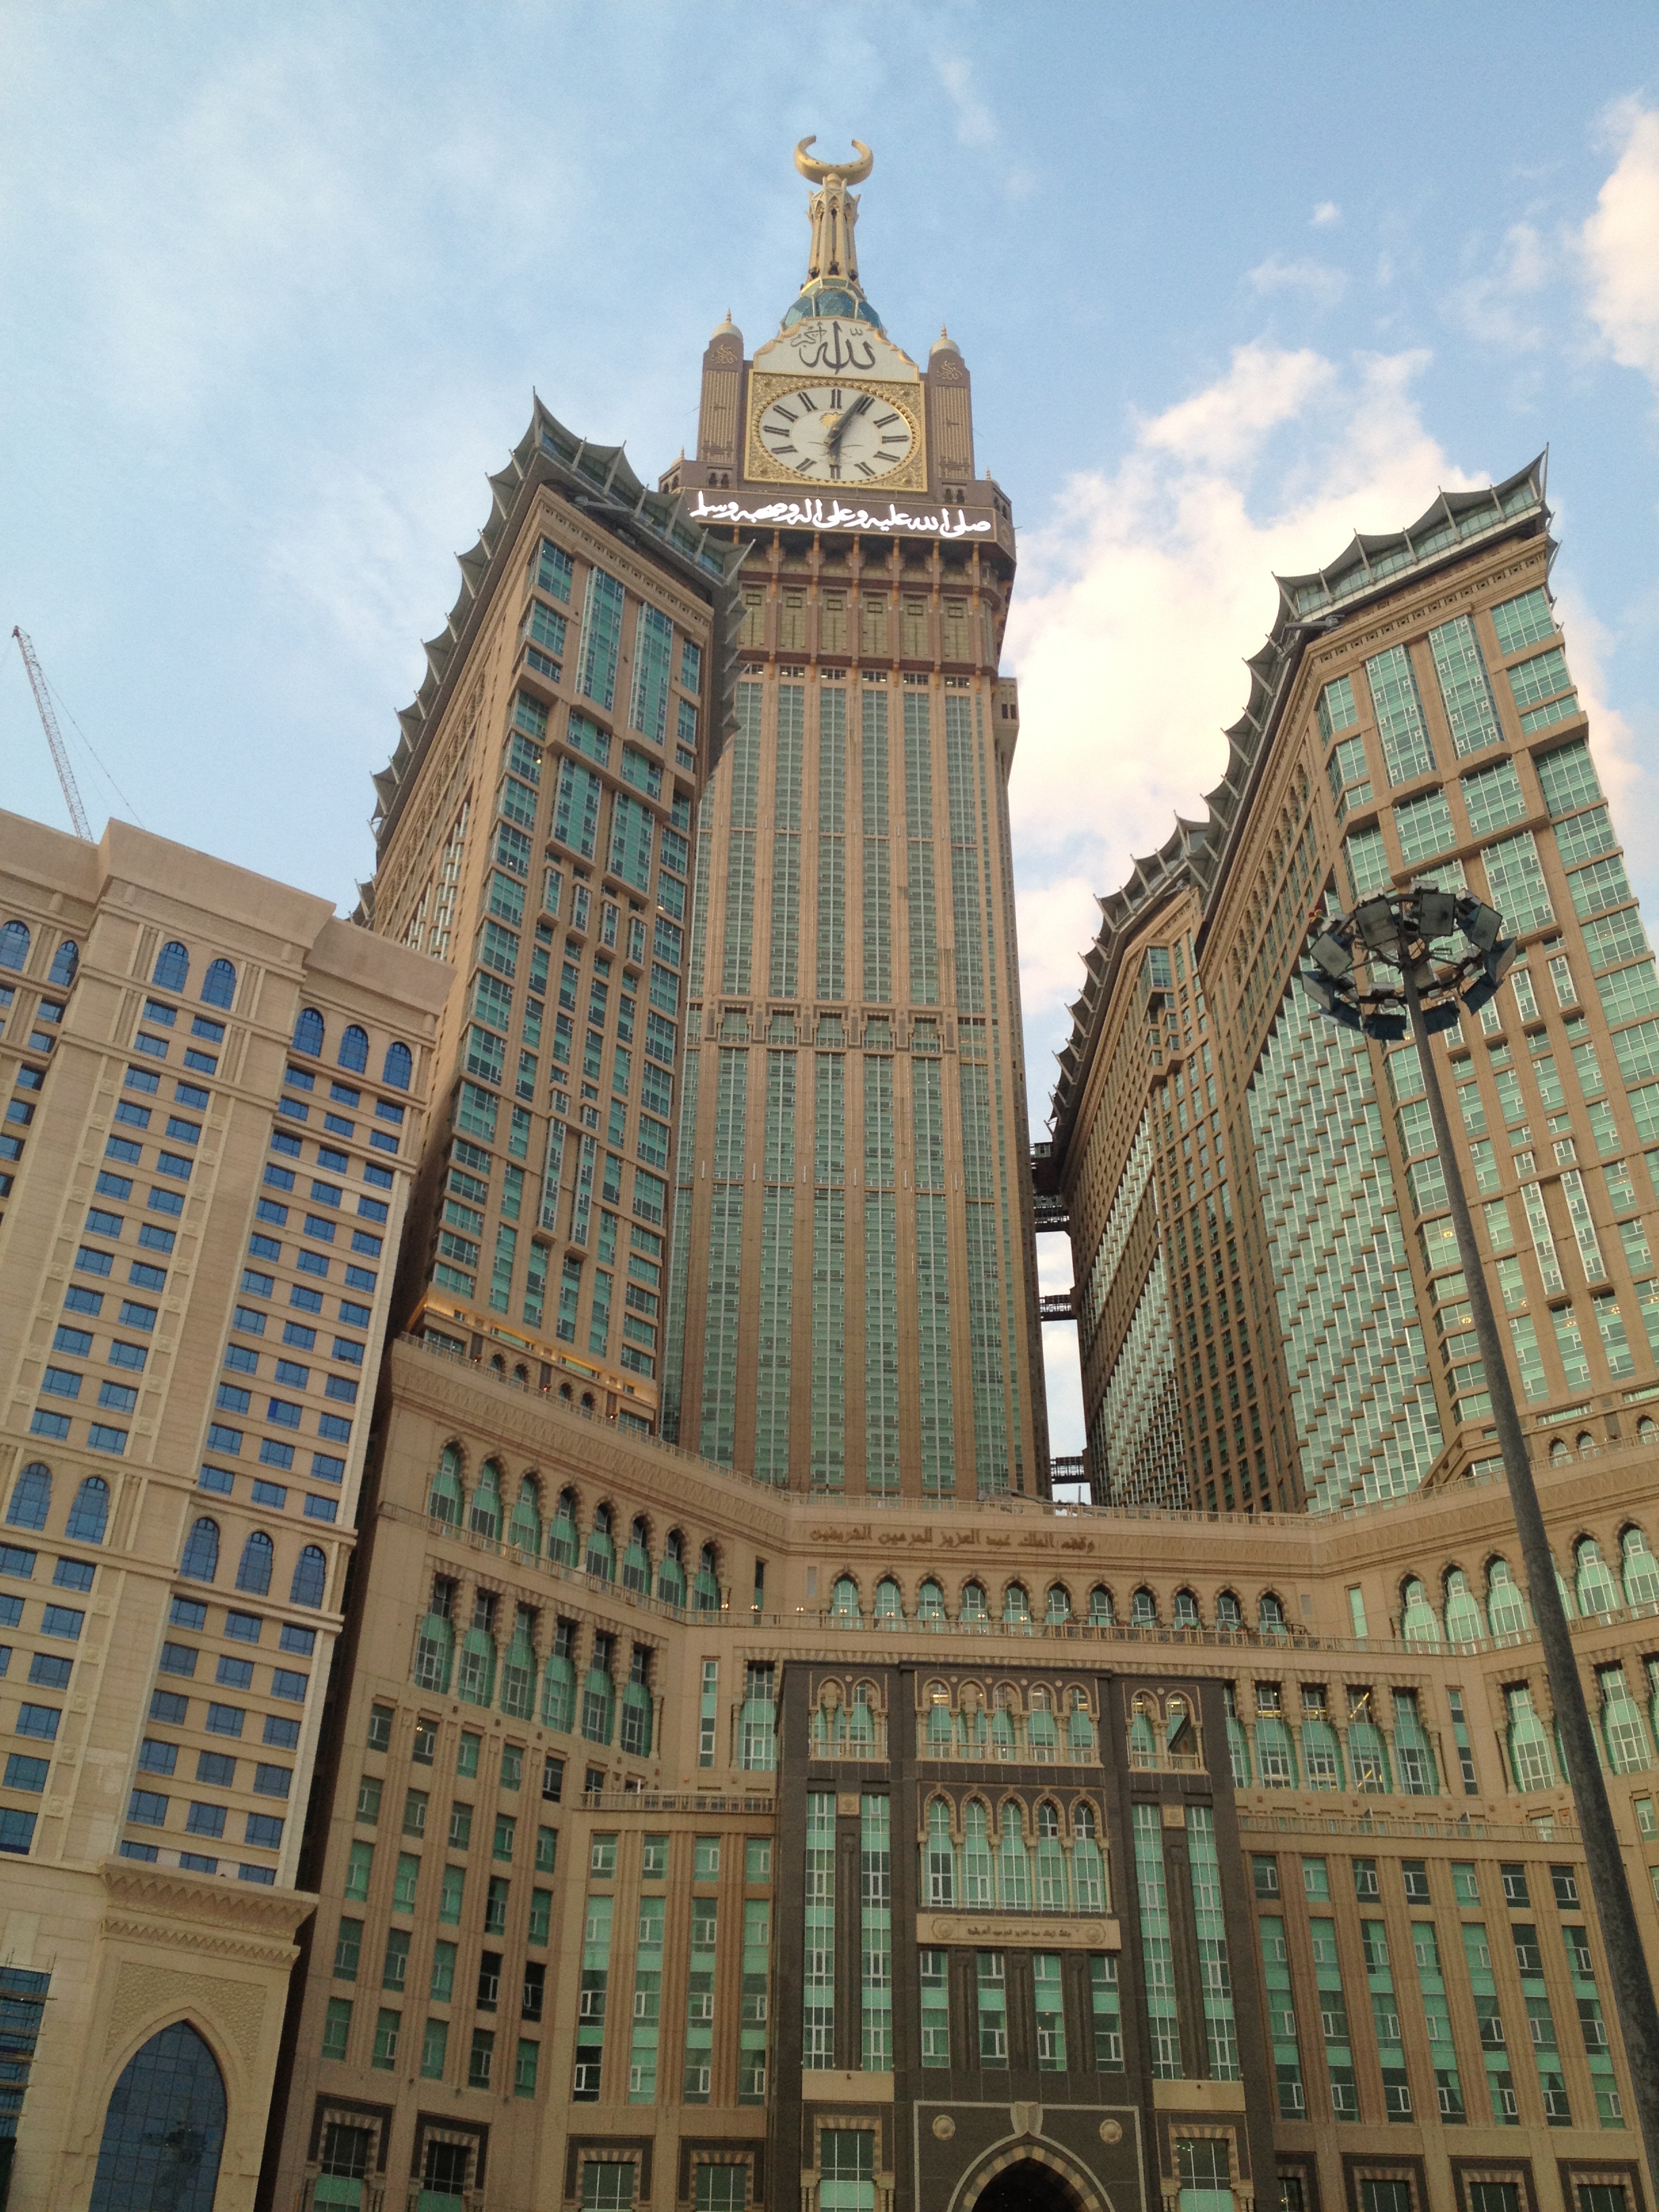 Royal tower hotel. Башня Абрадж Аль-Бейт. Королевская башня Абрадж Аль Бейт. Часовая башня комплекса Абрадж. Часовая башня комплекса Абраж Аль-Бейт, Мекк.